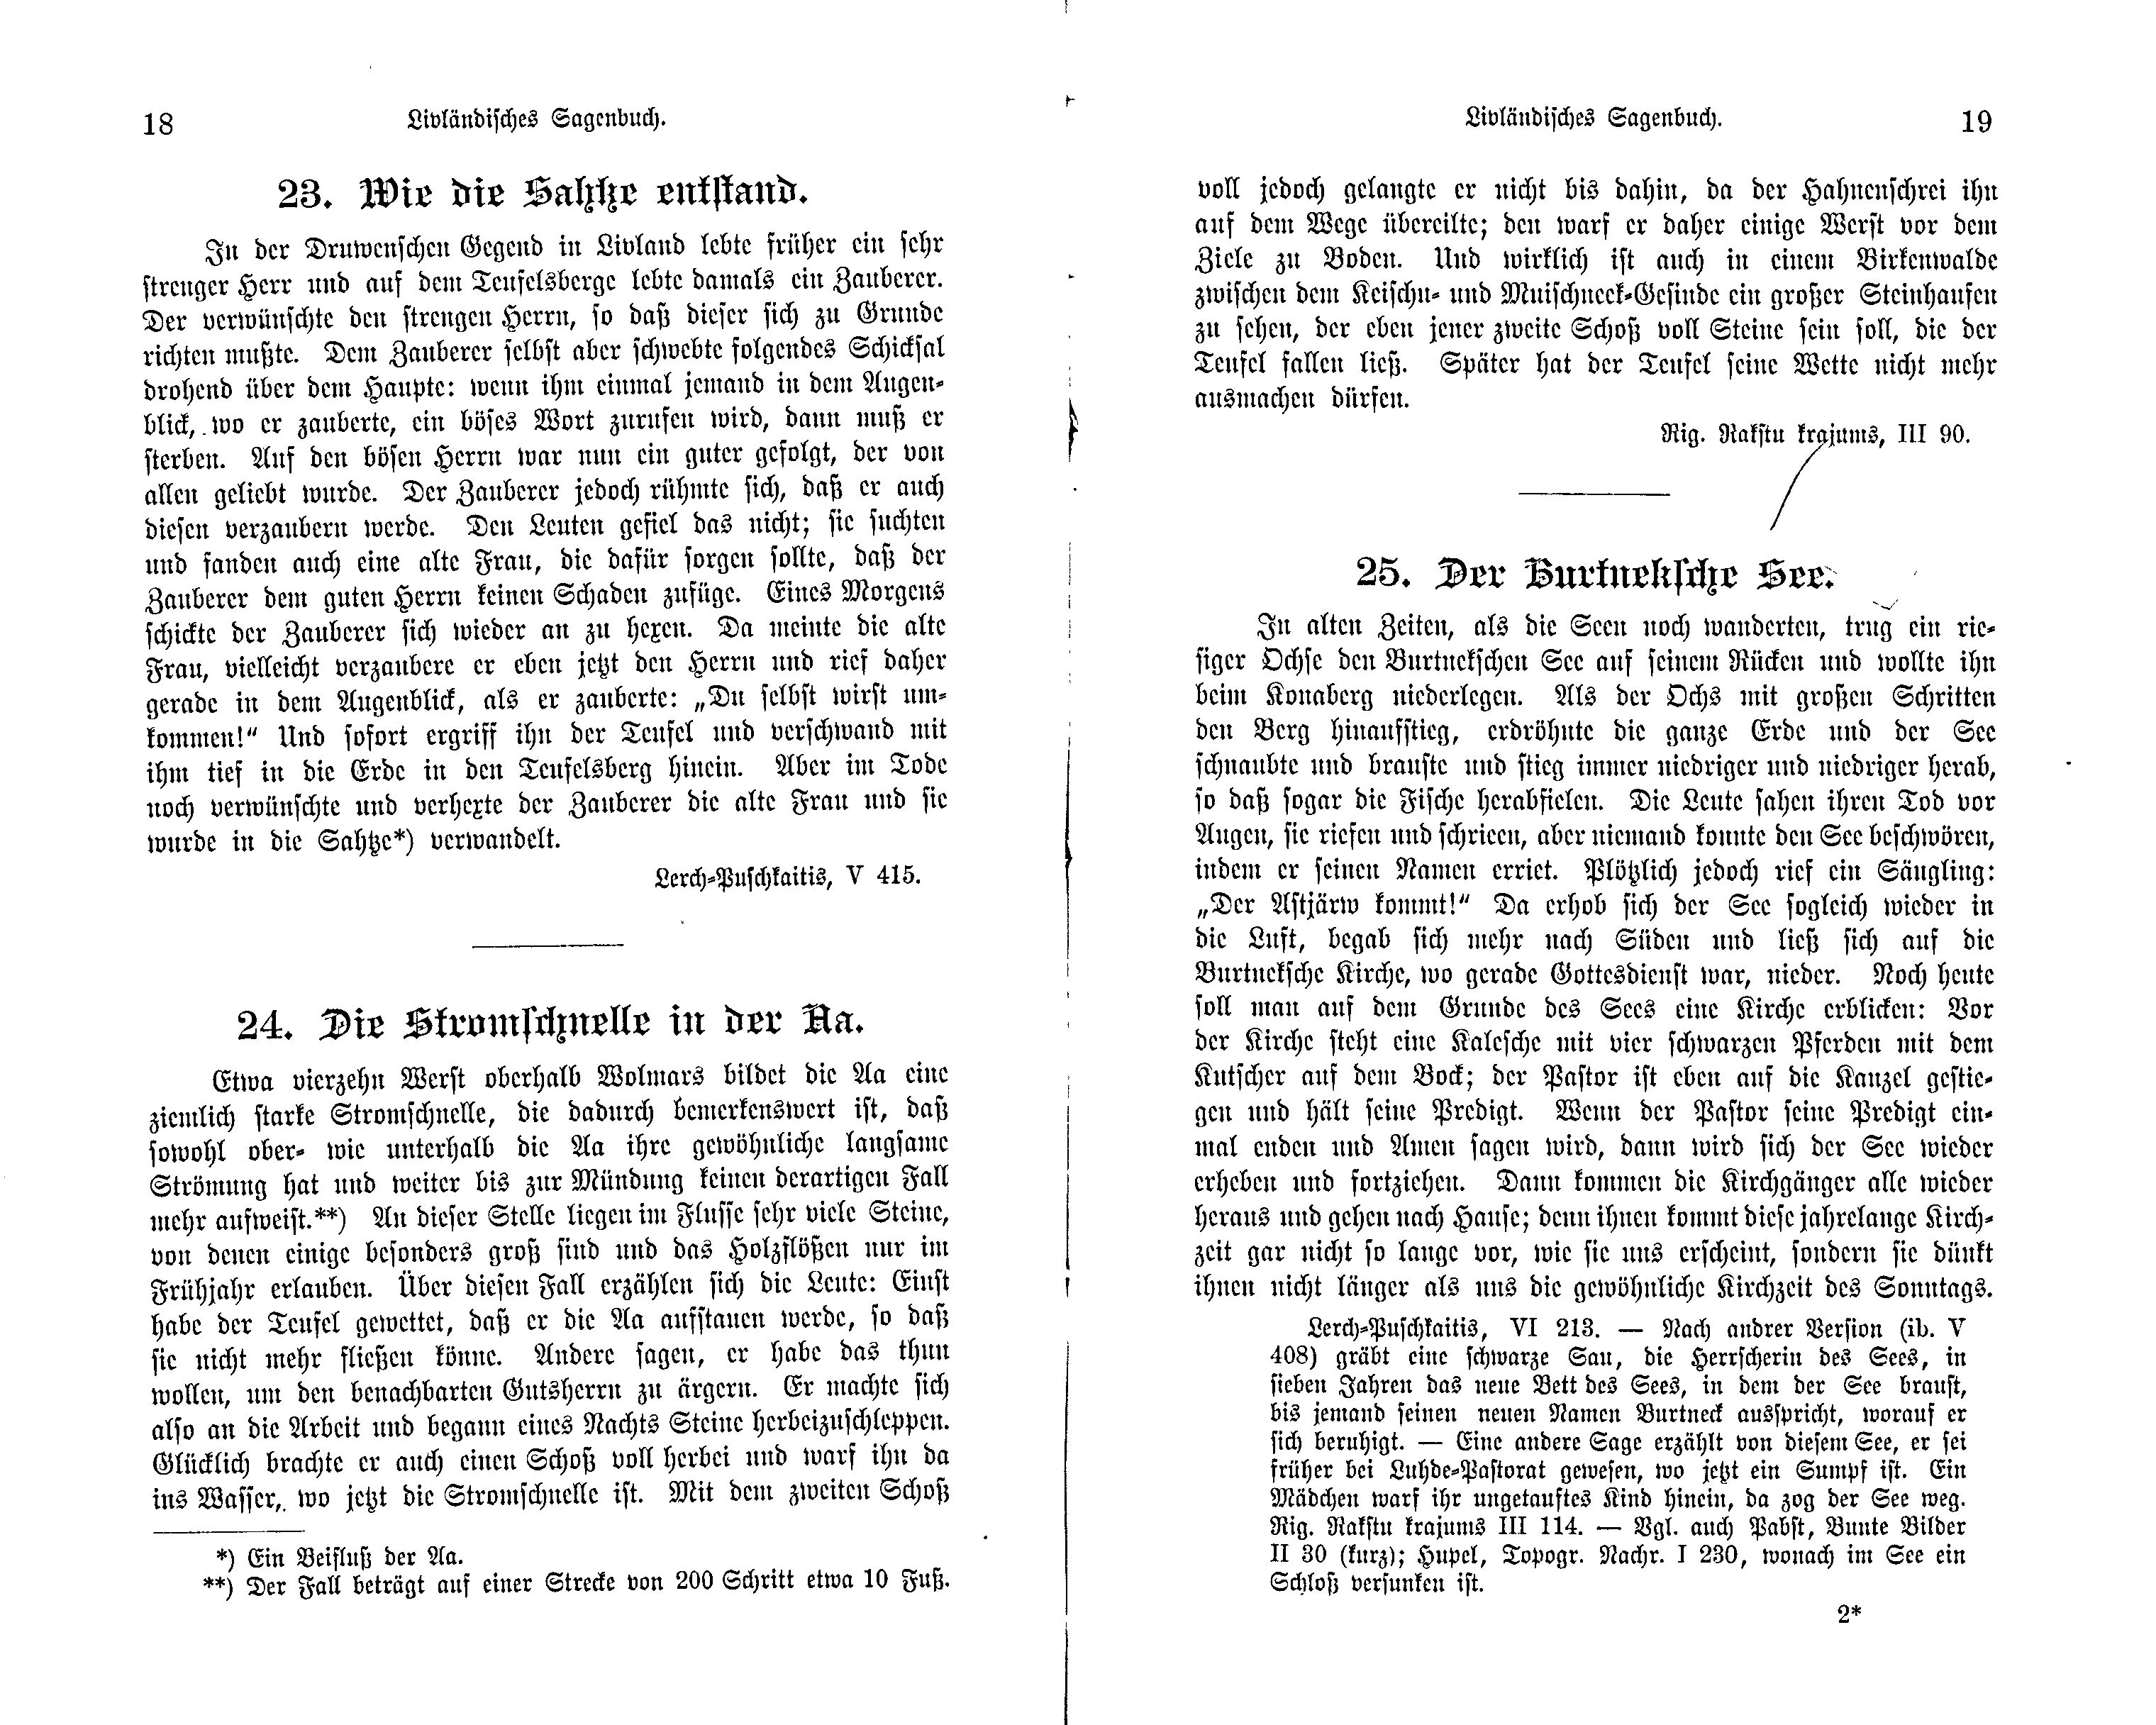 Der Burtneksche See (1897) | 1. (18-19) Main body of text